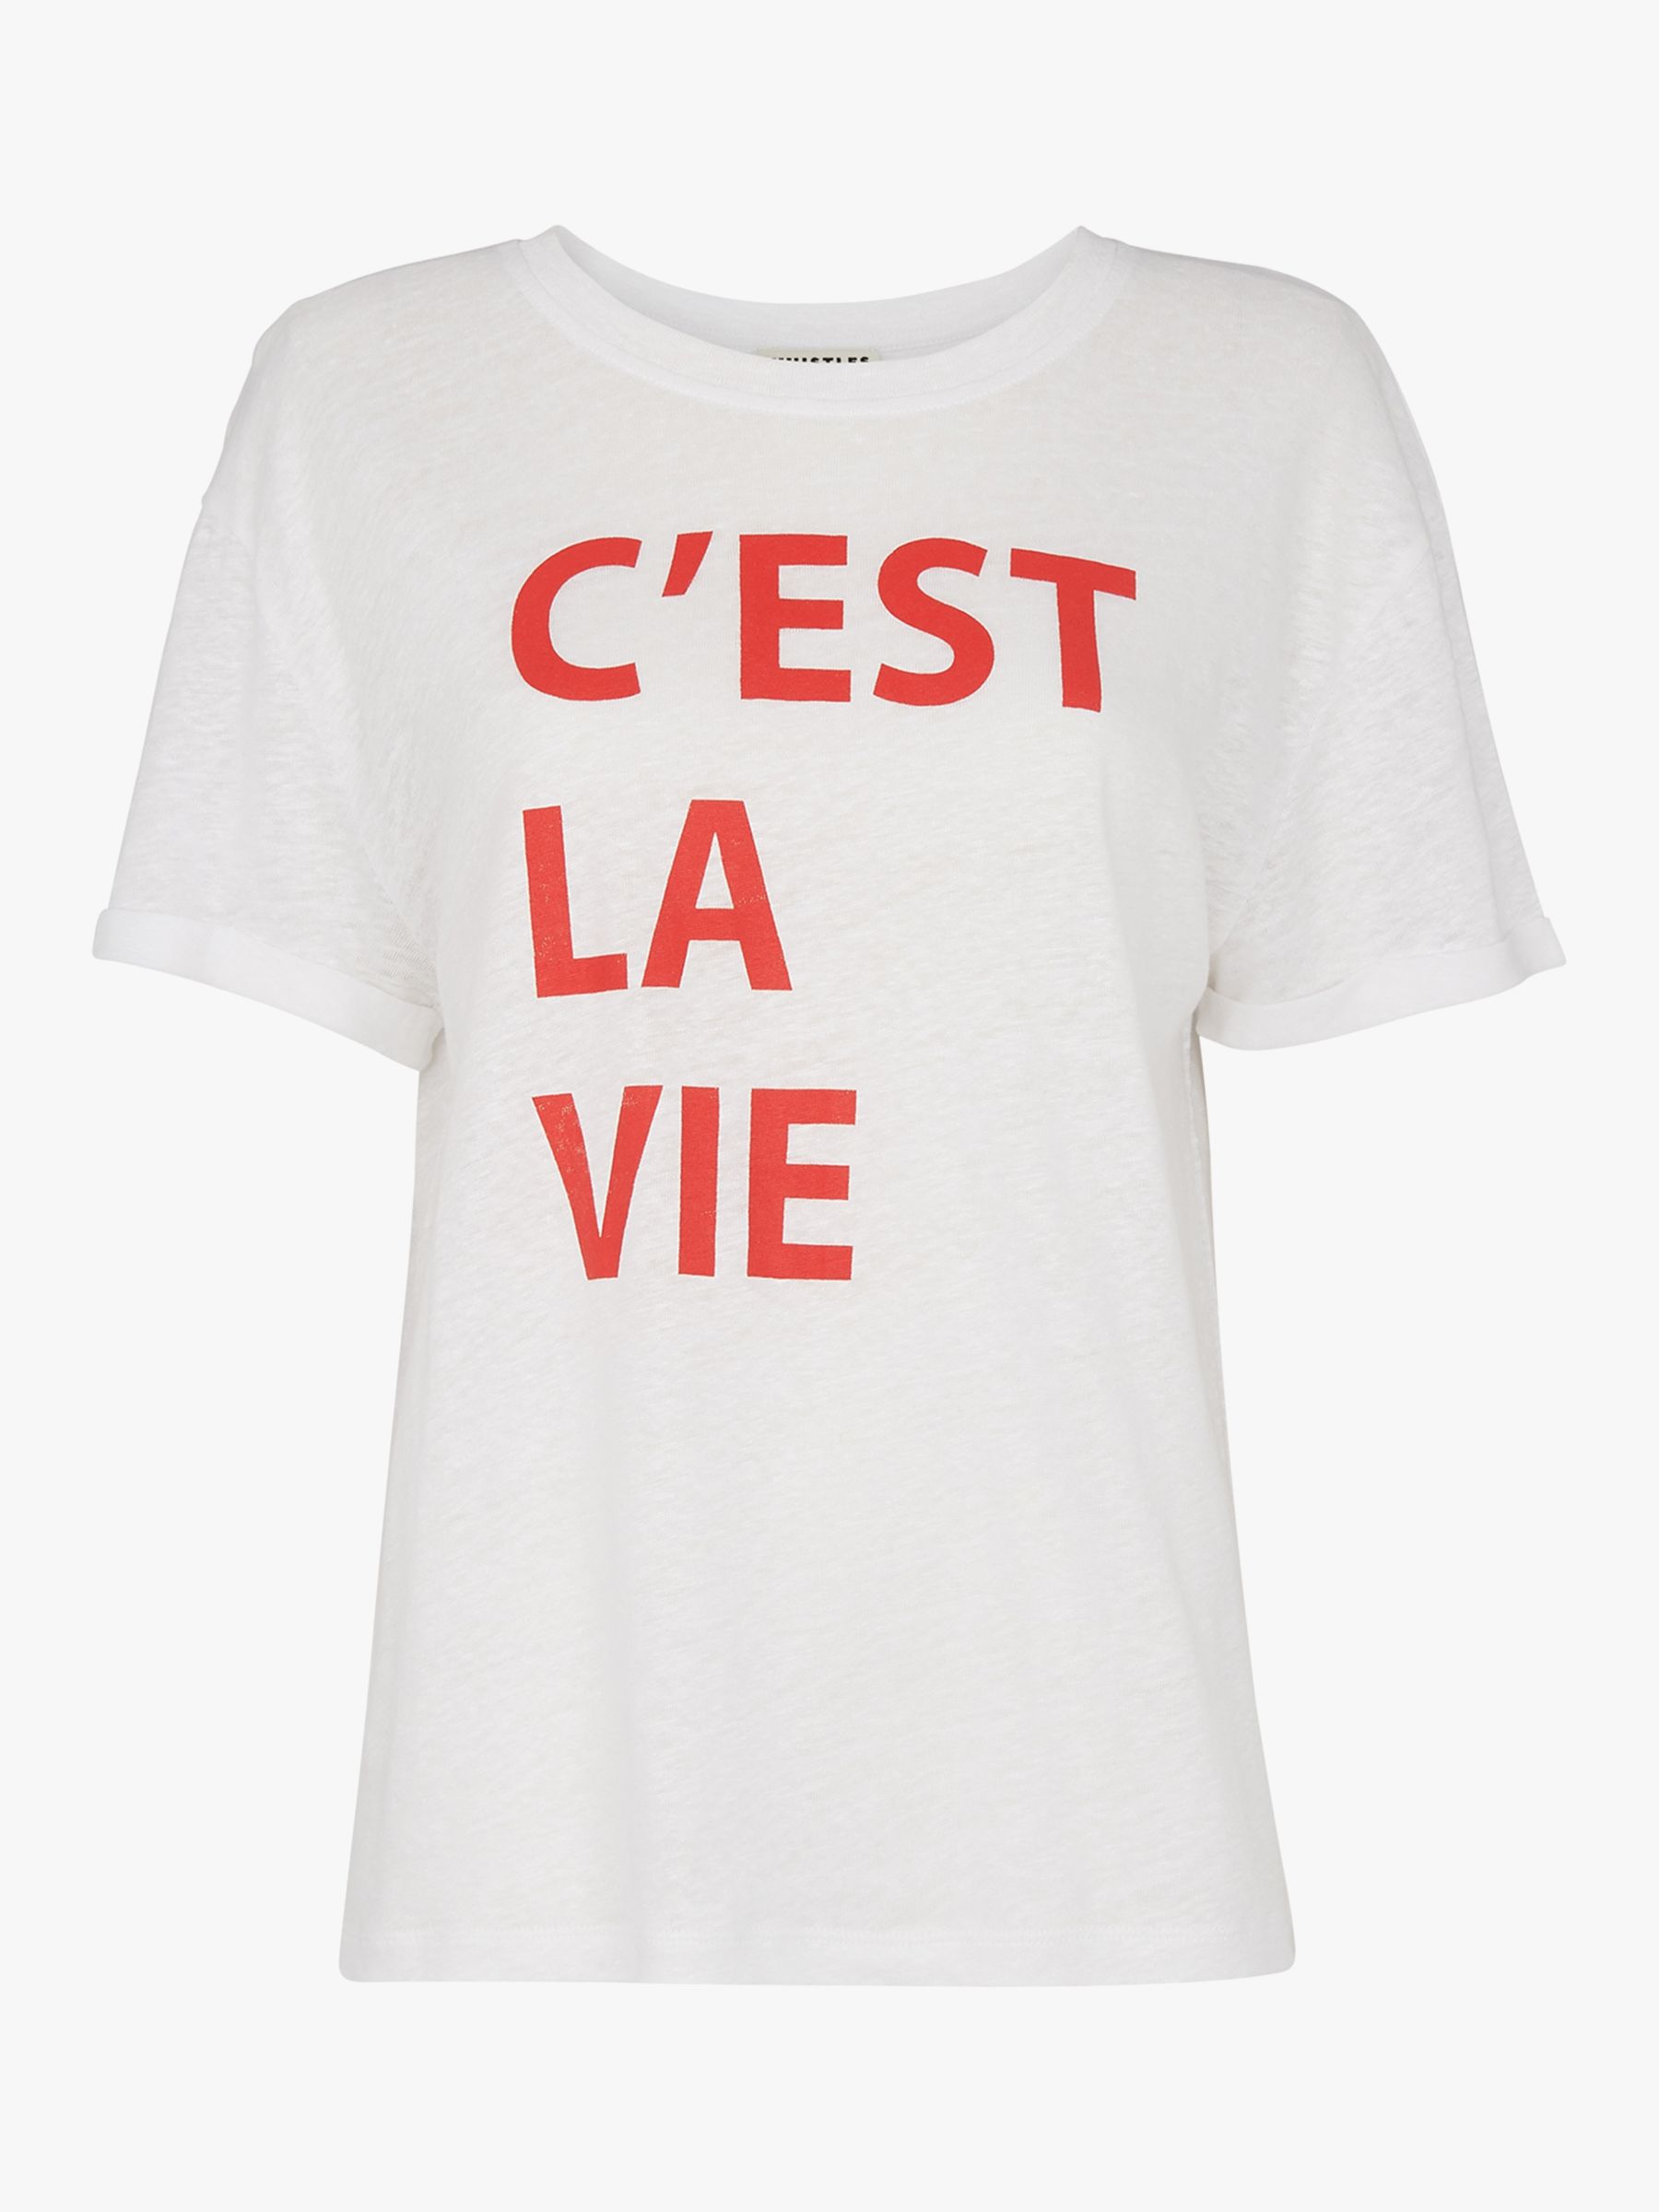 Whistles 'C'est La Vie' Typography Lounge T-Shirt, White